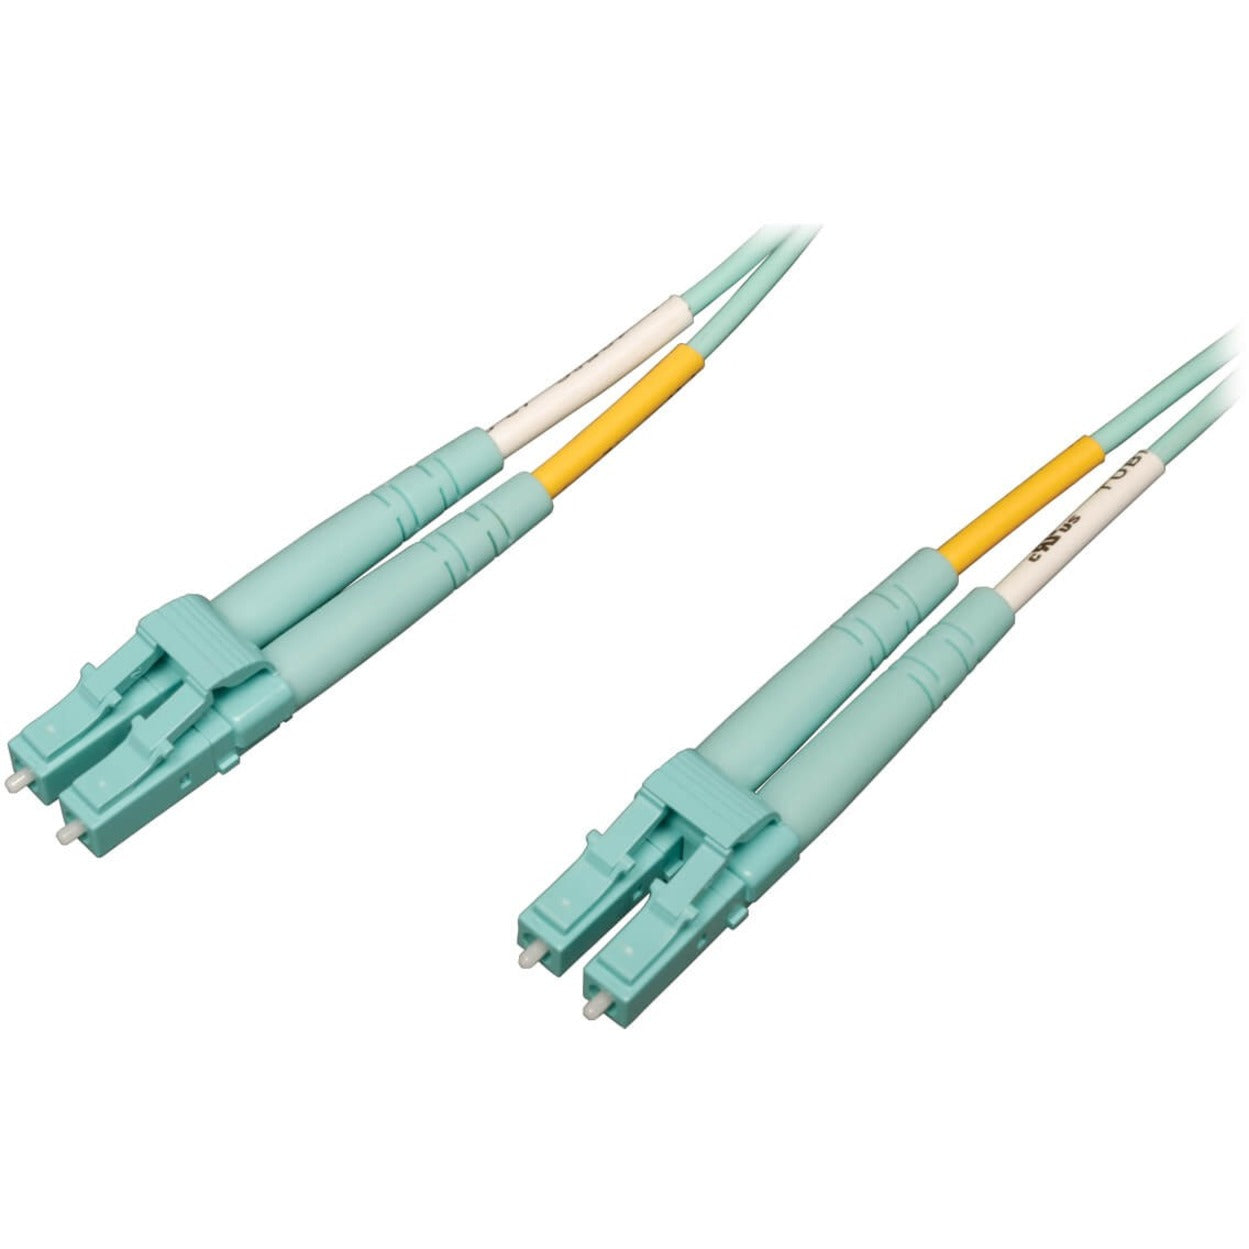 Tripp Lite N820-01M-OM4 Fiber Optic Duplex Patch Cable, 3.30 ft, Multi-mode, Aqua